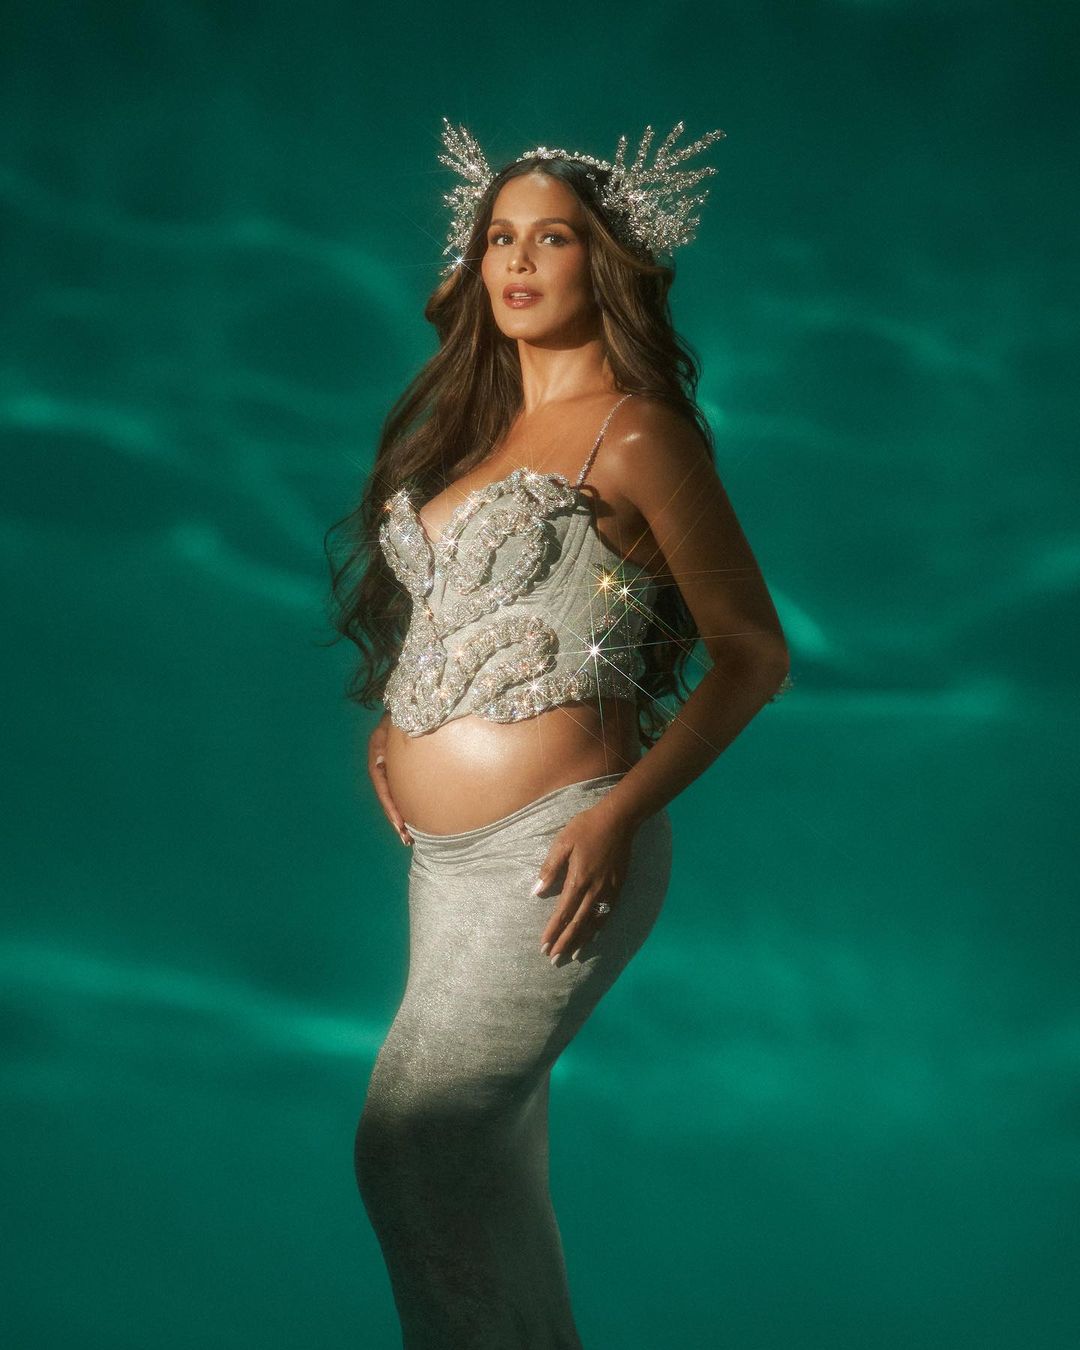 Iza Calzado as Amihan in her maternity shoot